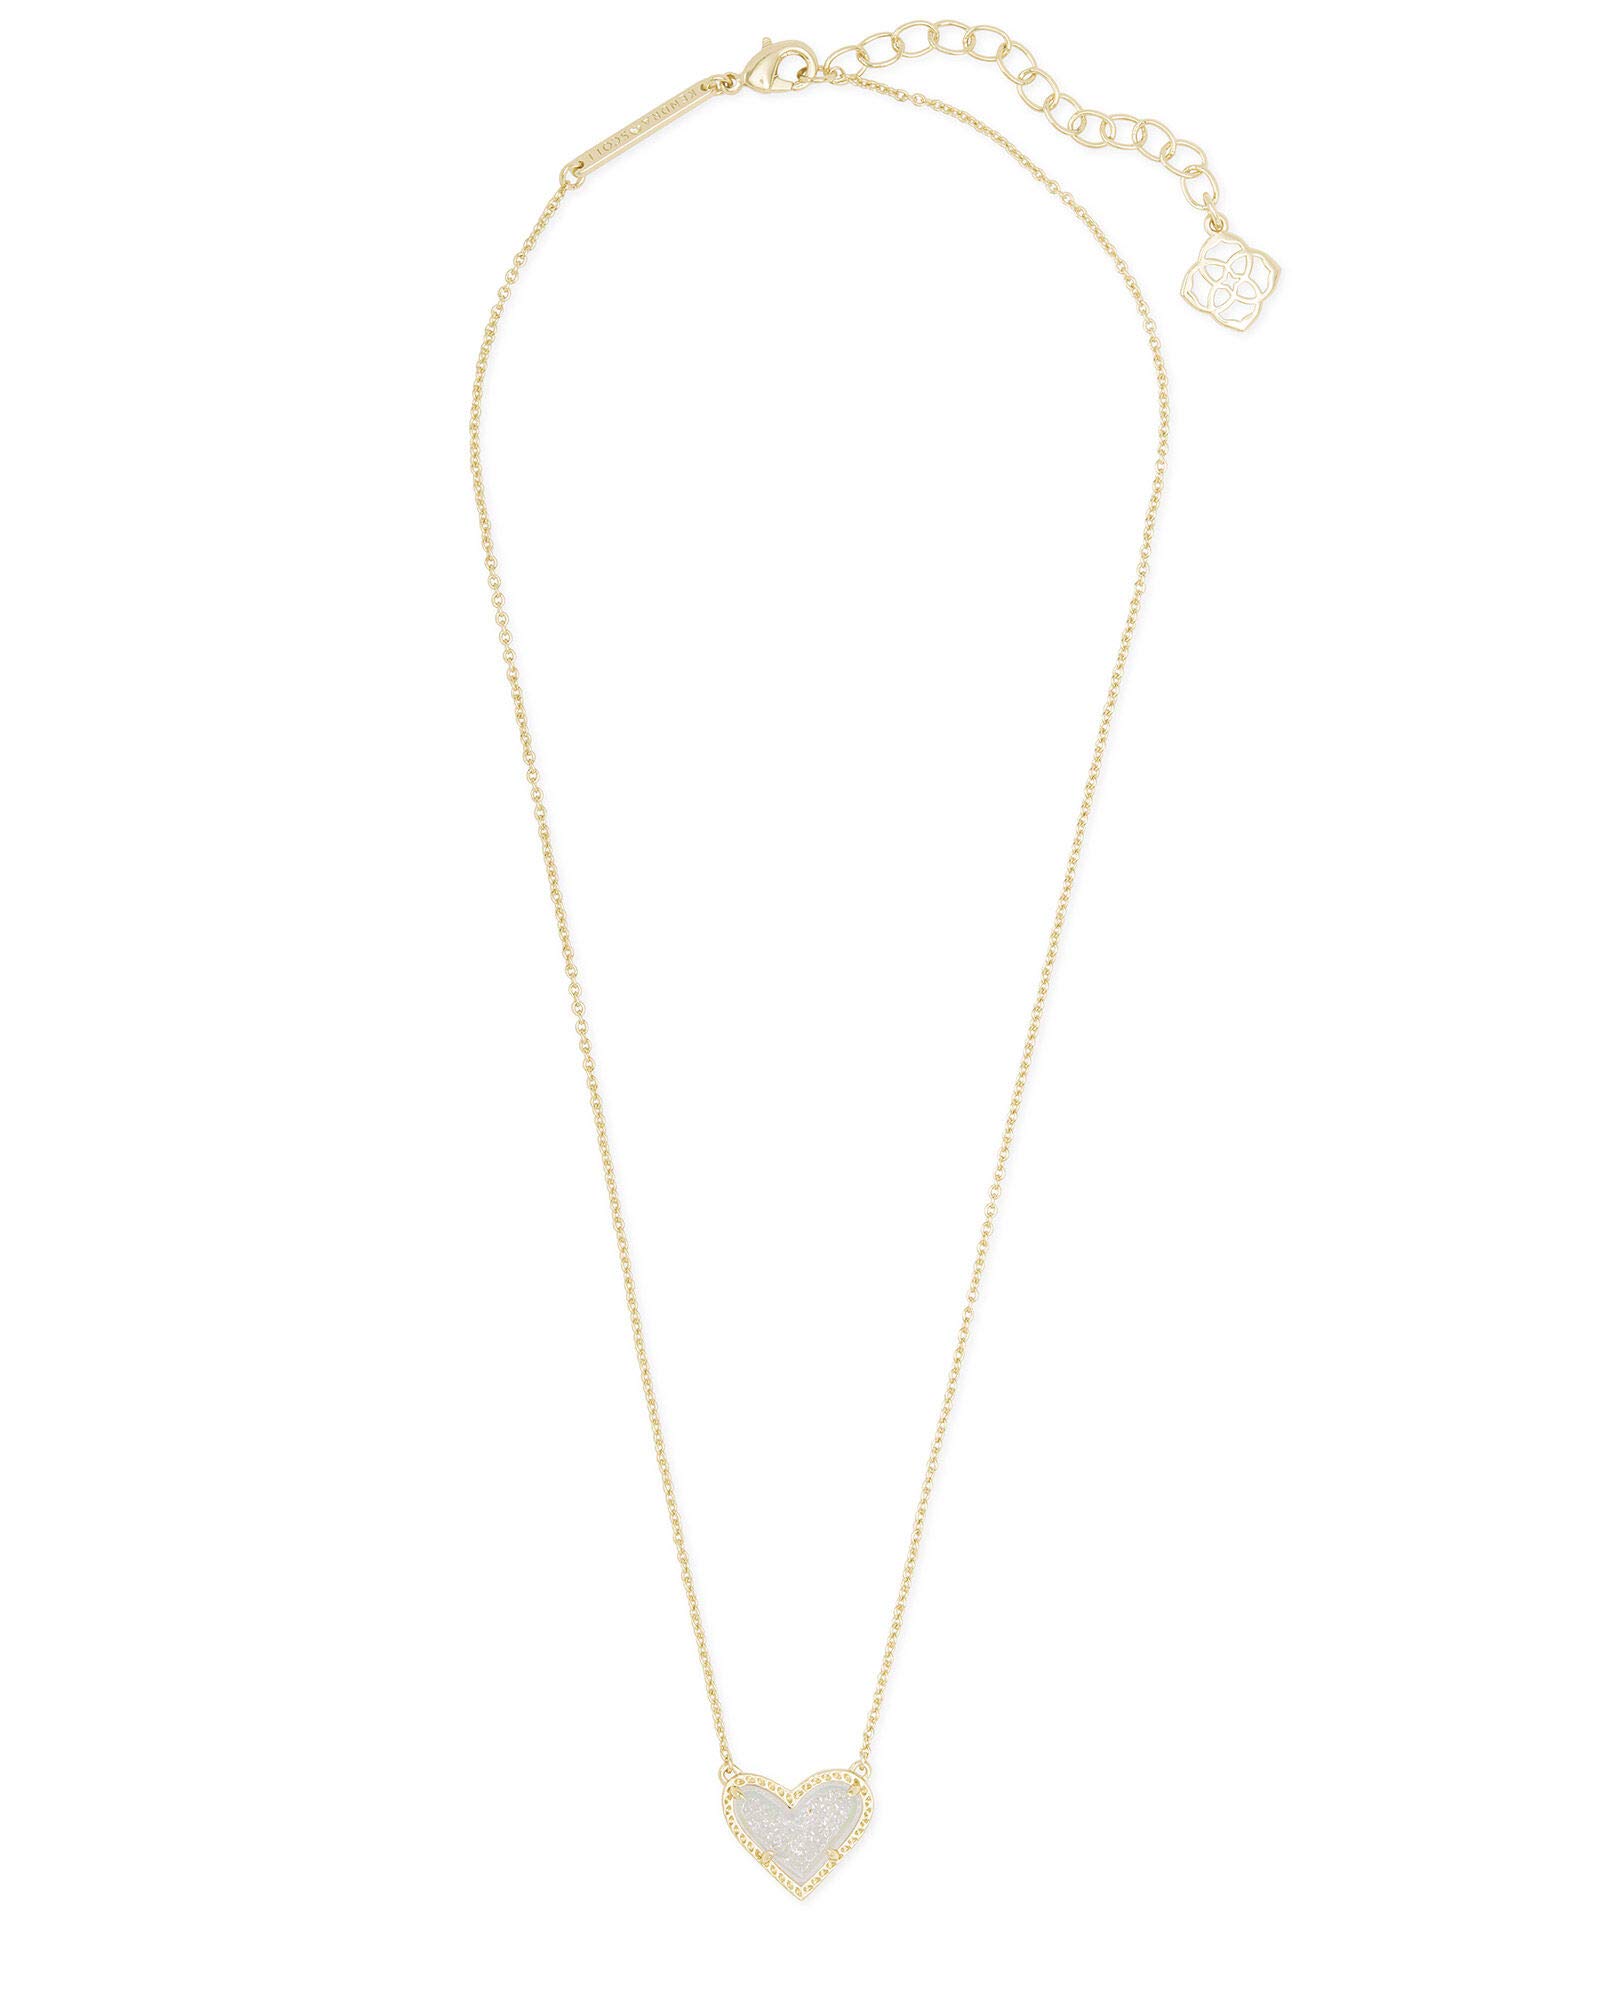 Kendra Scott Ari Heart Adjustable Length Pendant Necklace for Women, Fashion Jewelry